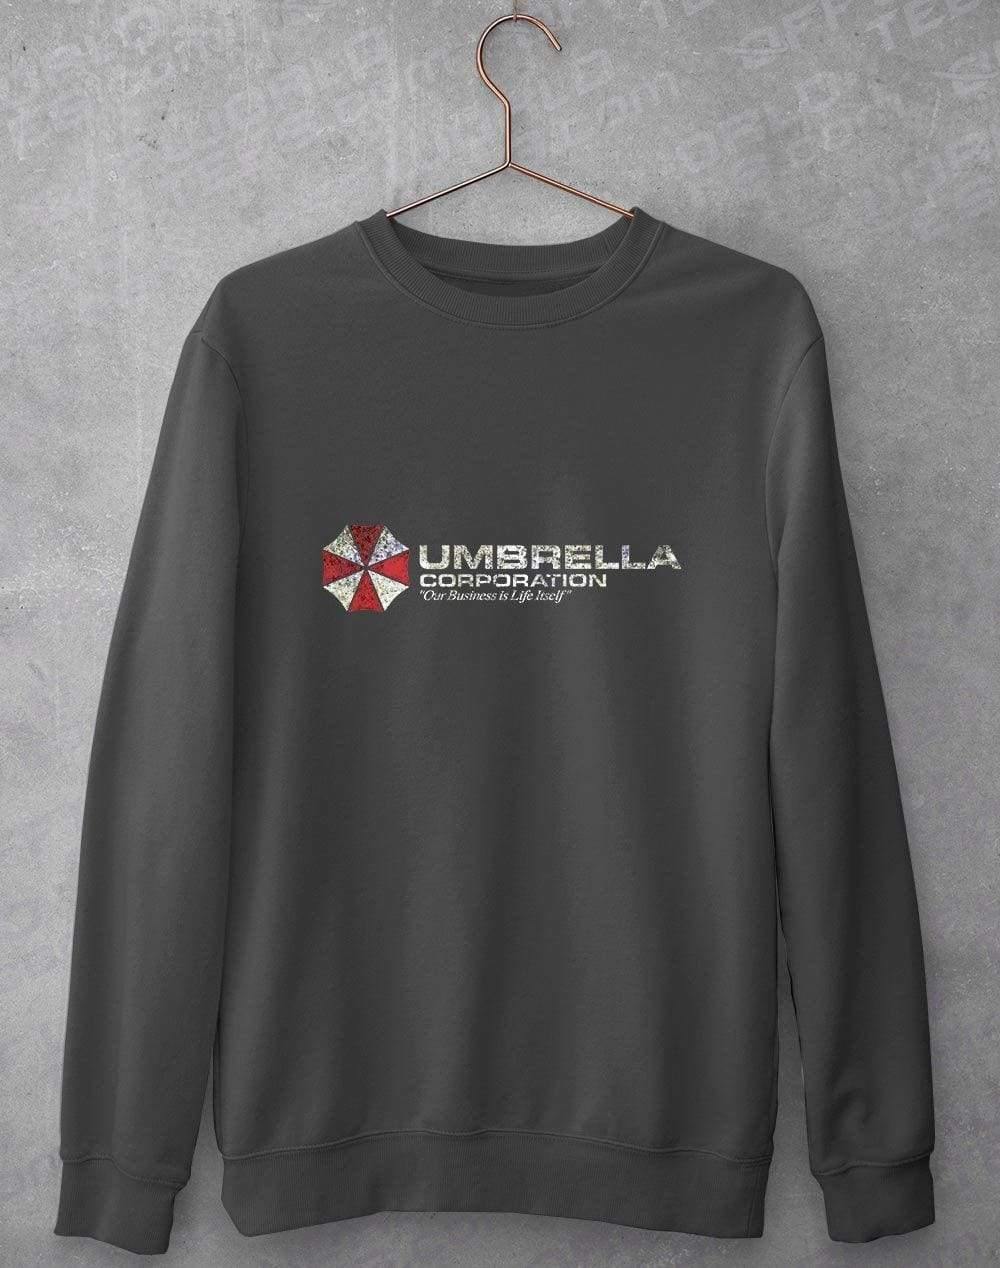 Umbrella Corporation Sweatshirt S / Charcoal  - Off World Tees